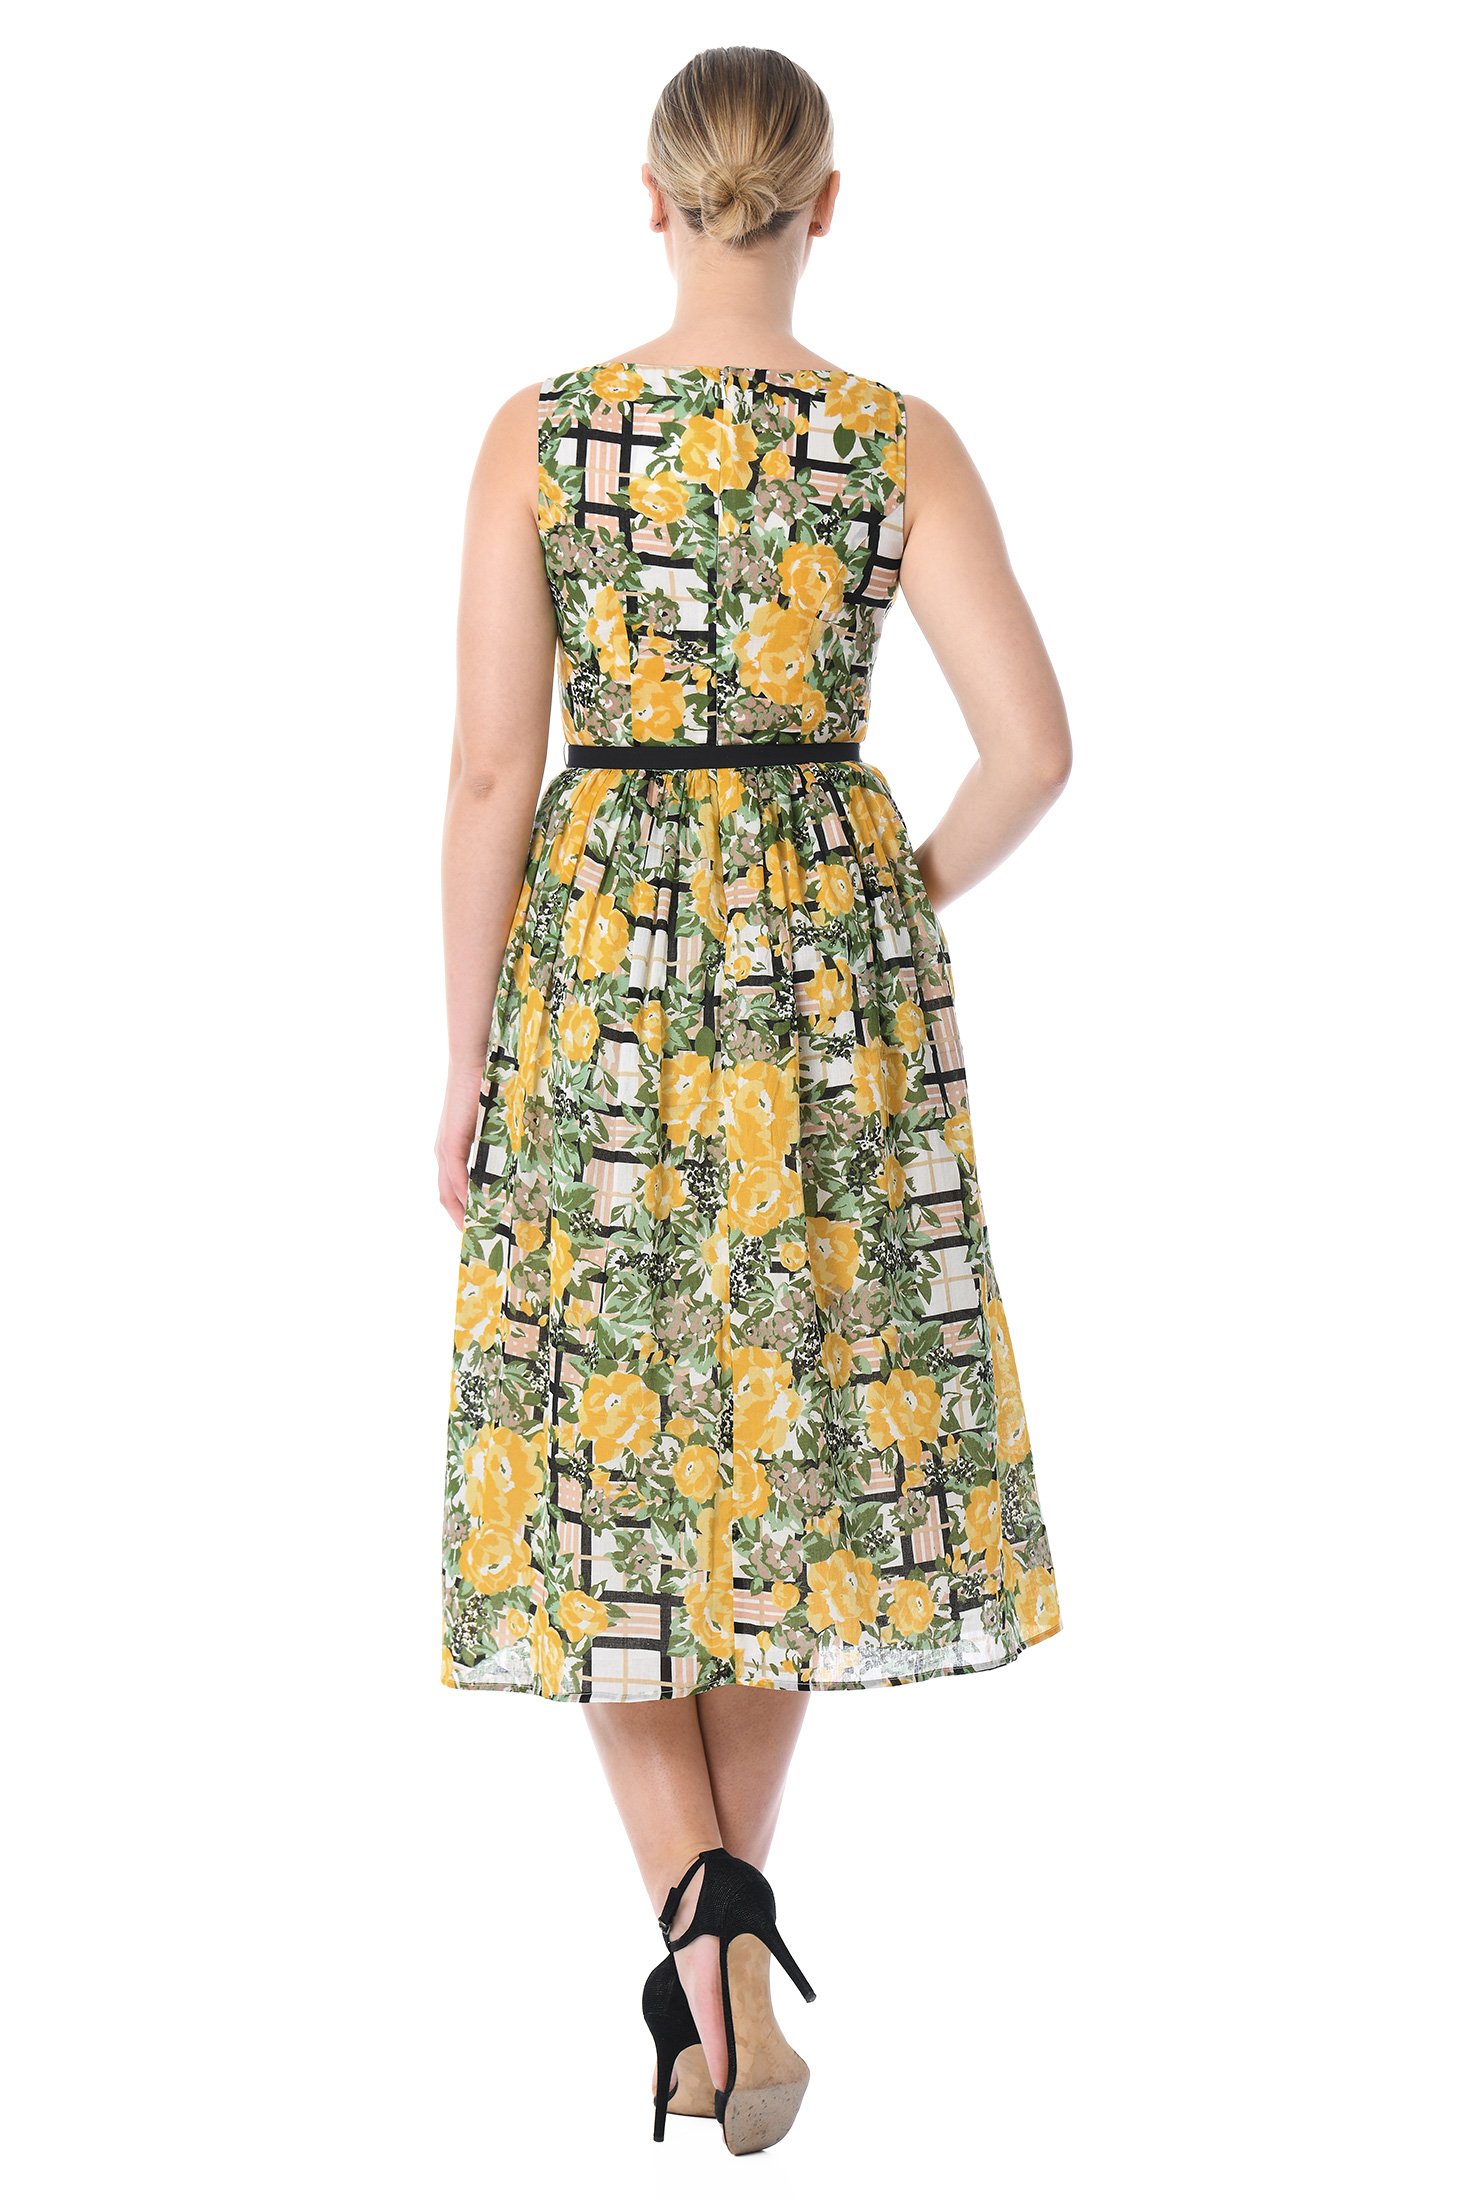 Shop Floral print cotton crinoline underlayer dress | eShakti